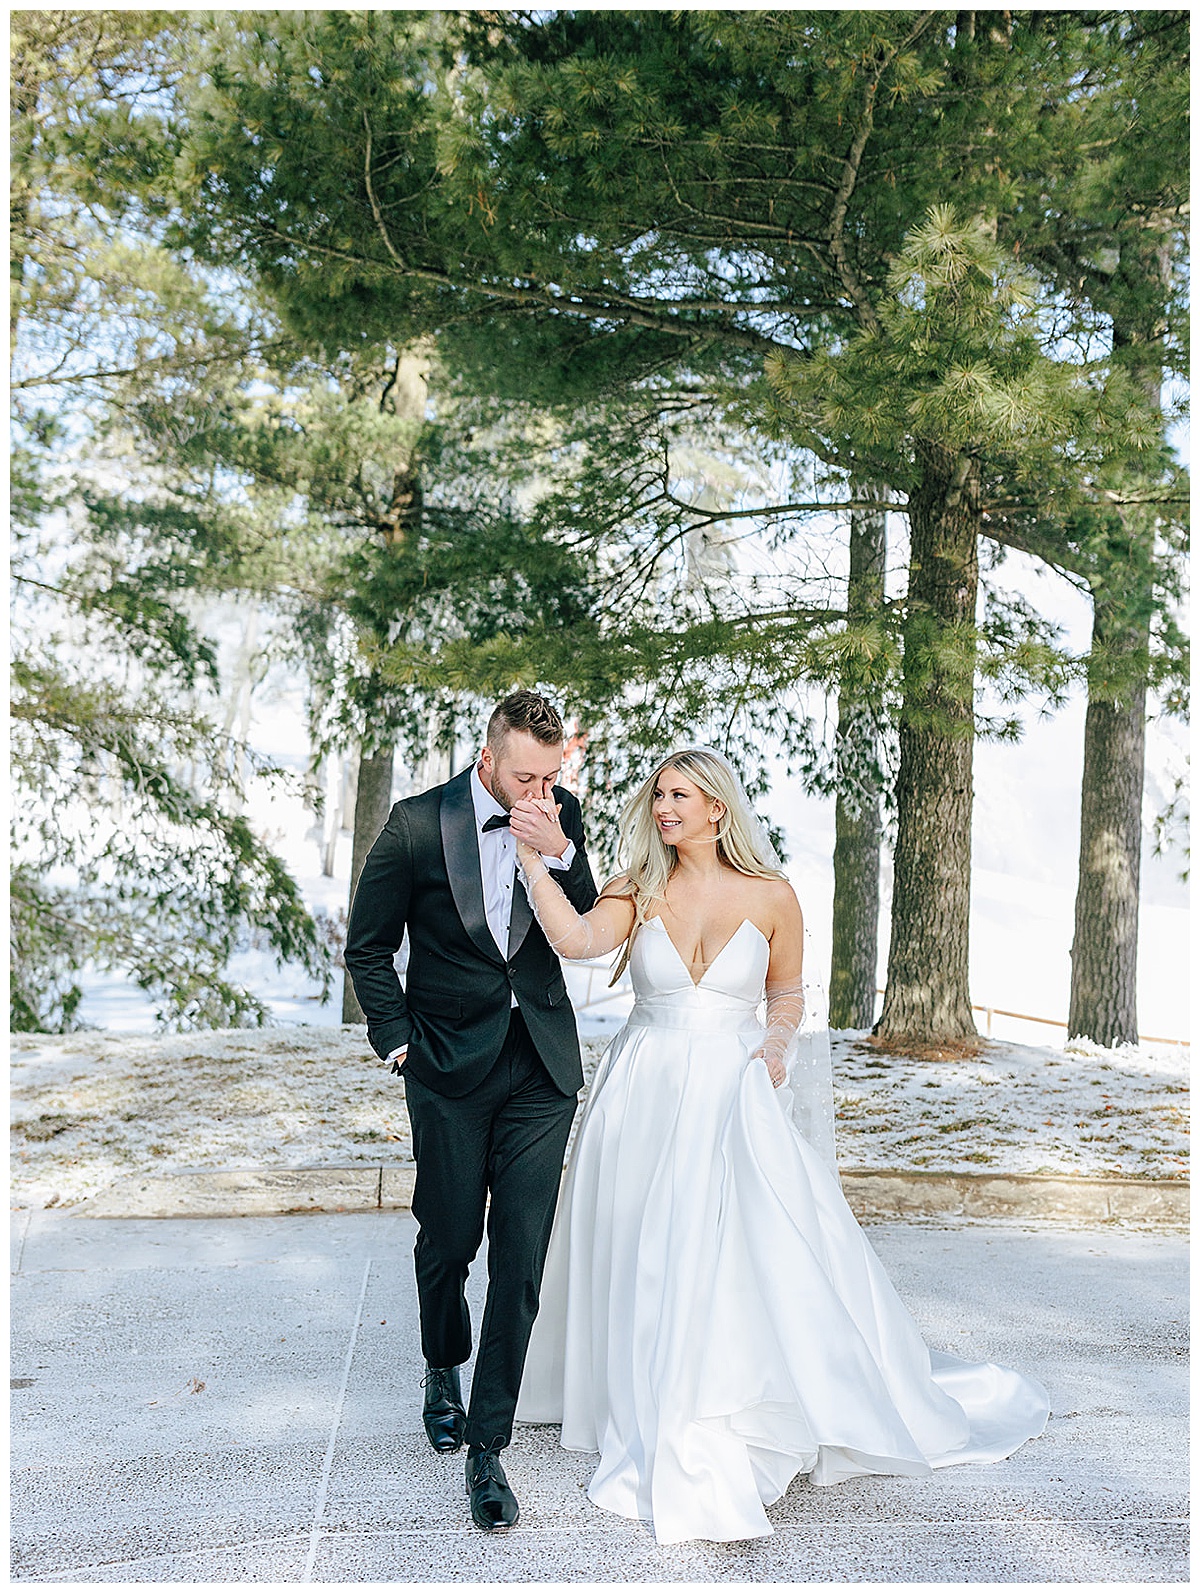 Couple walk together hand in hand for Snowy Winter Wonderland Wedding